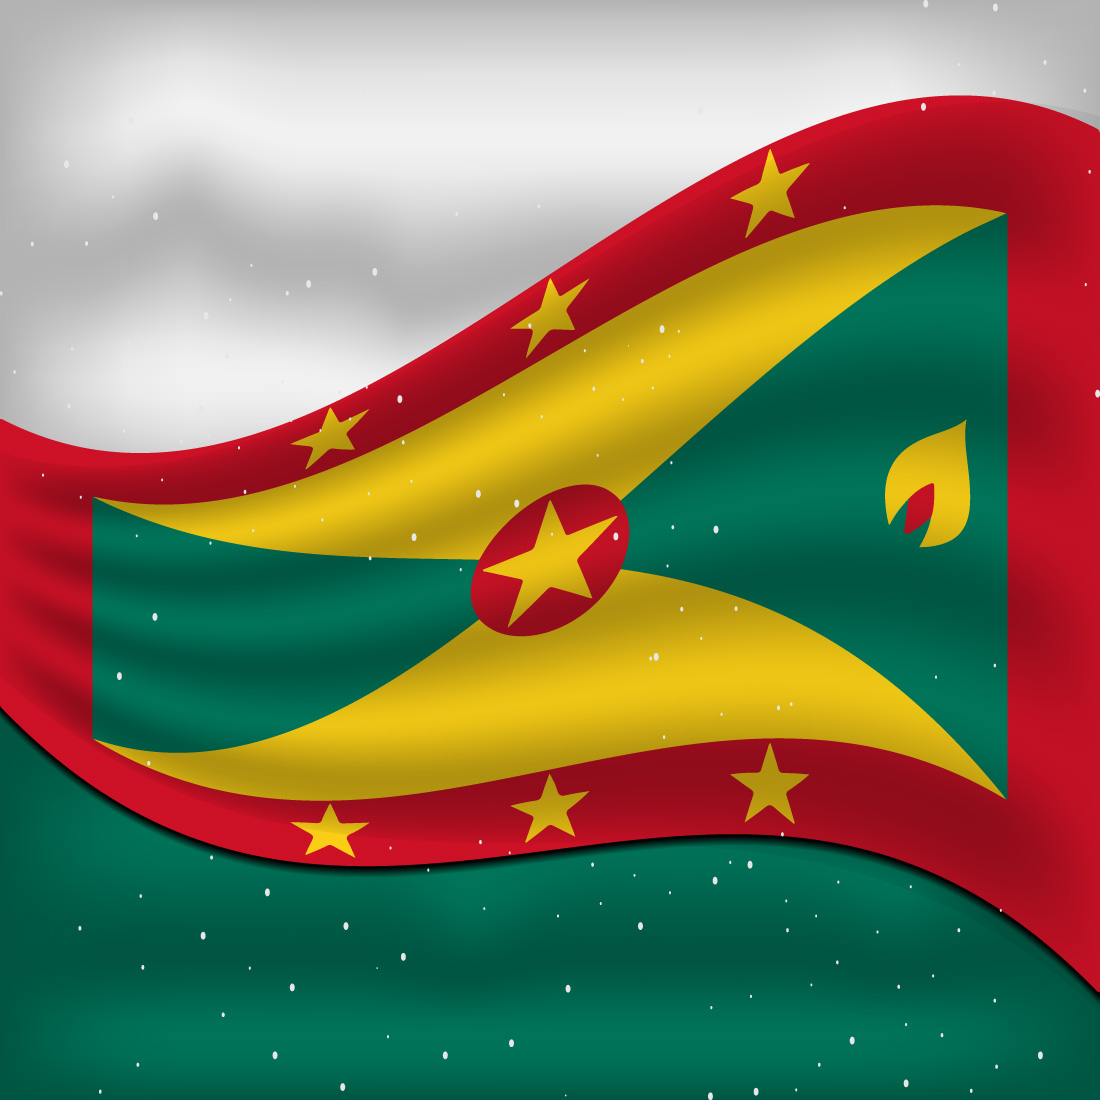 Amazing image of the Grenada flag.